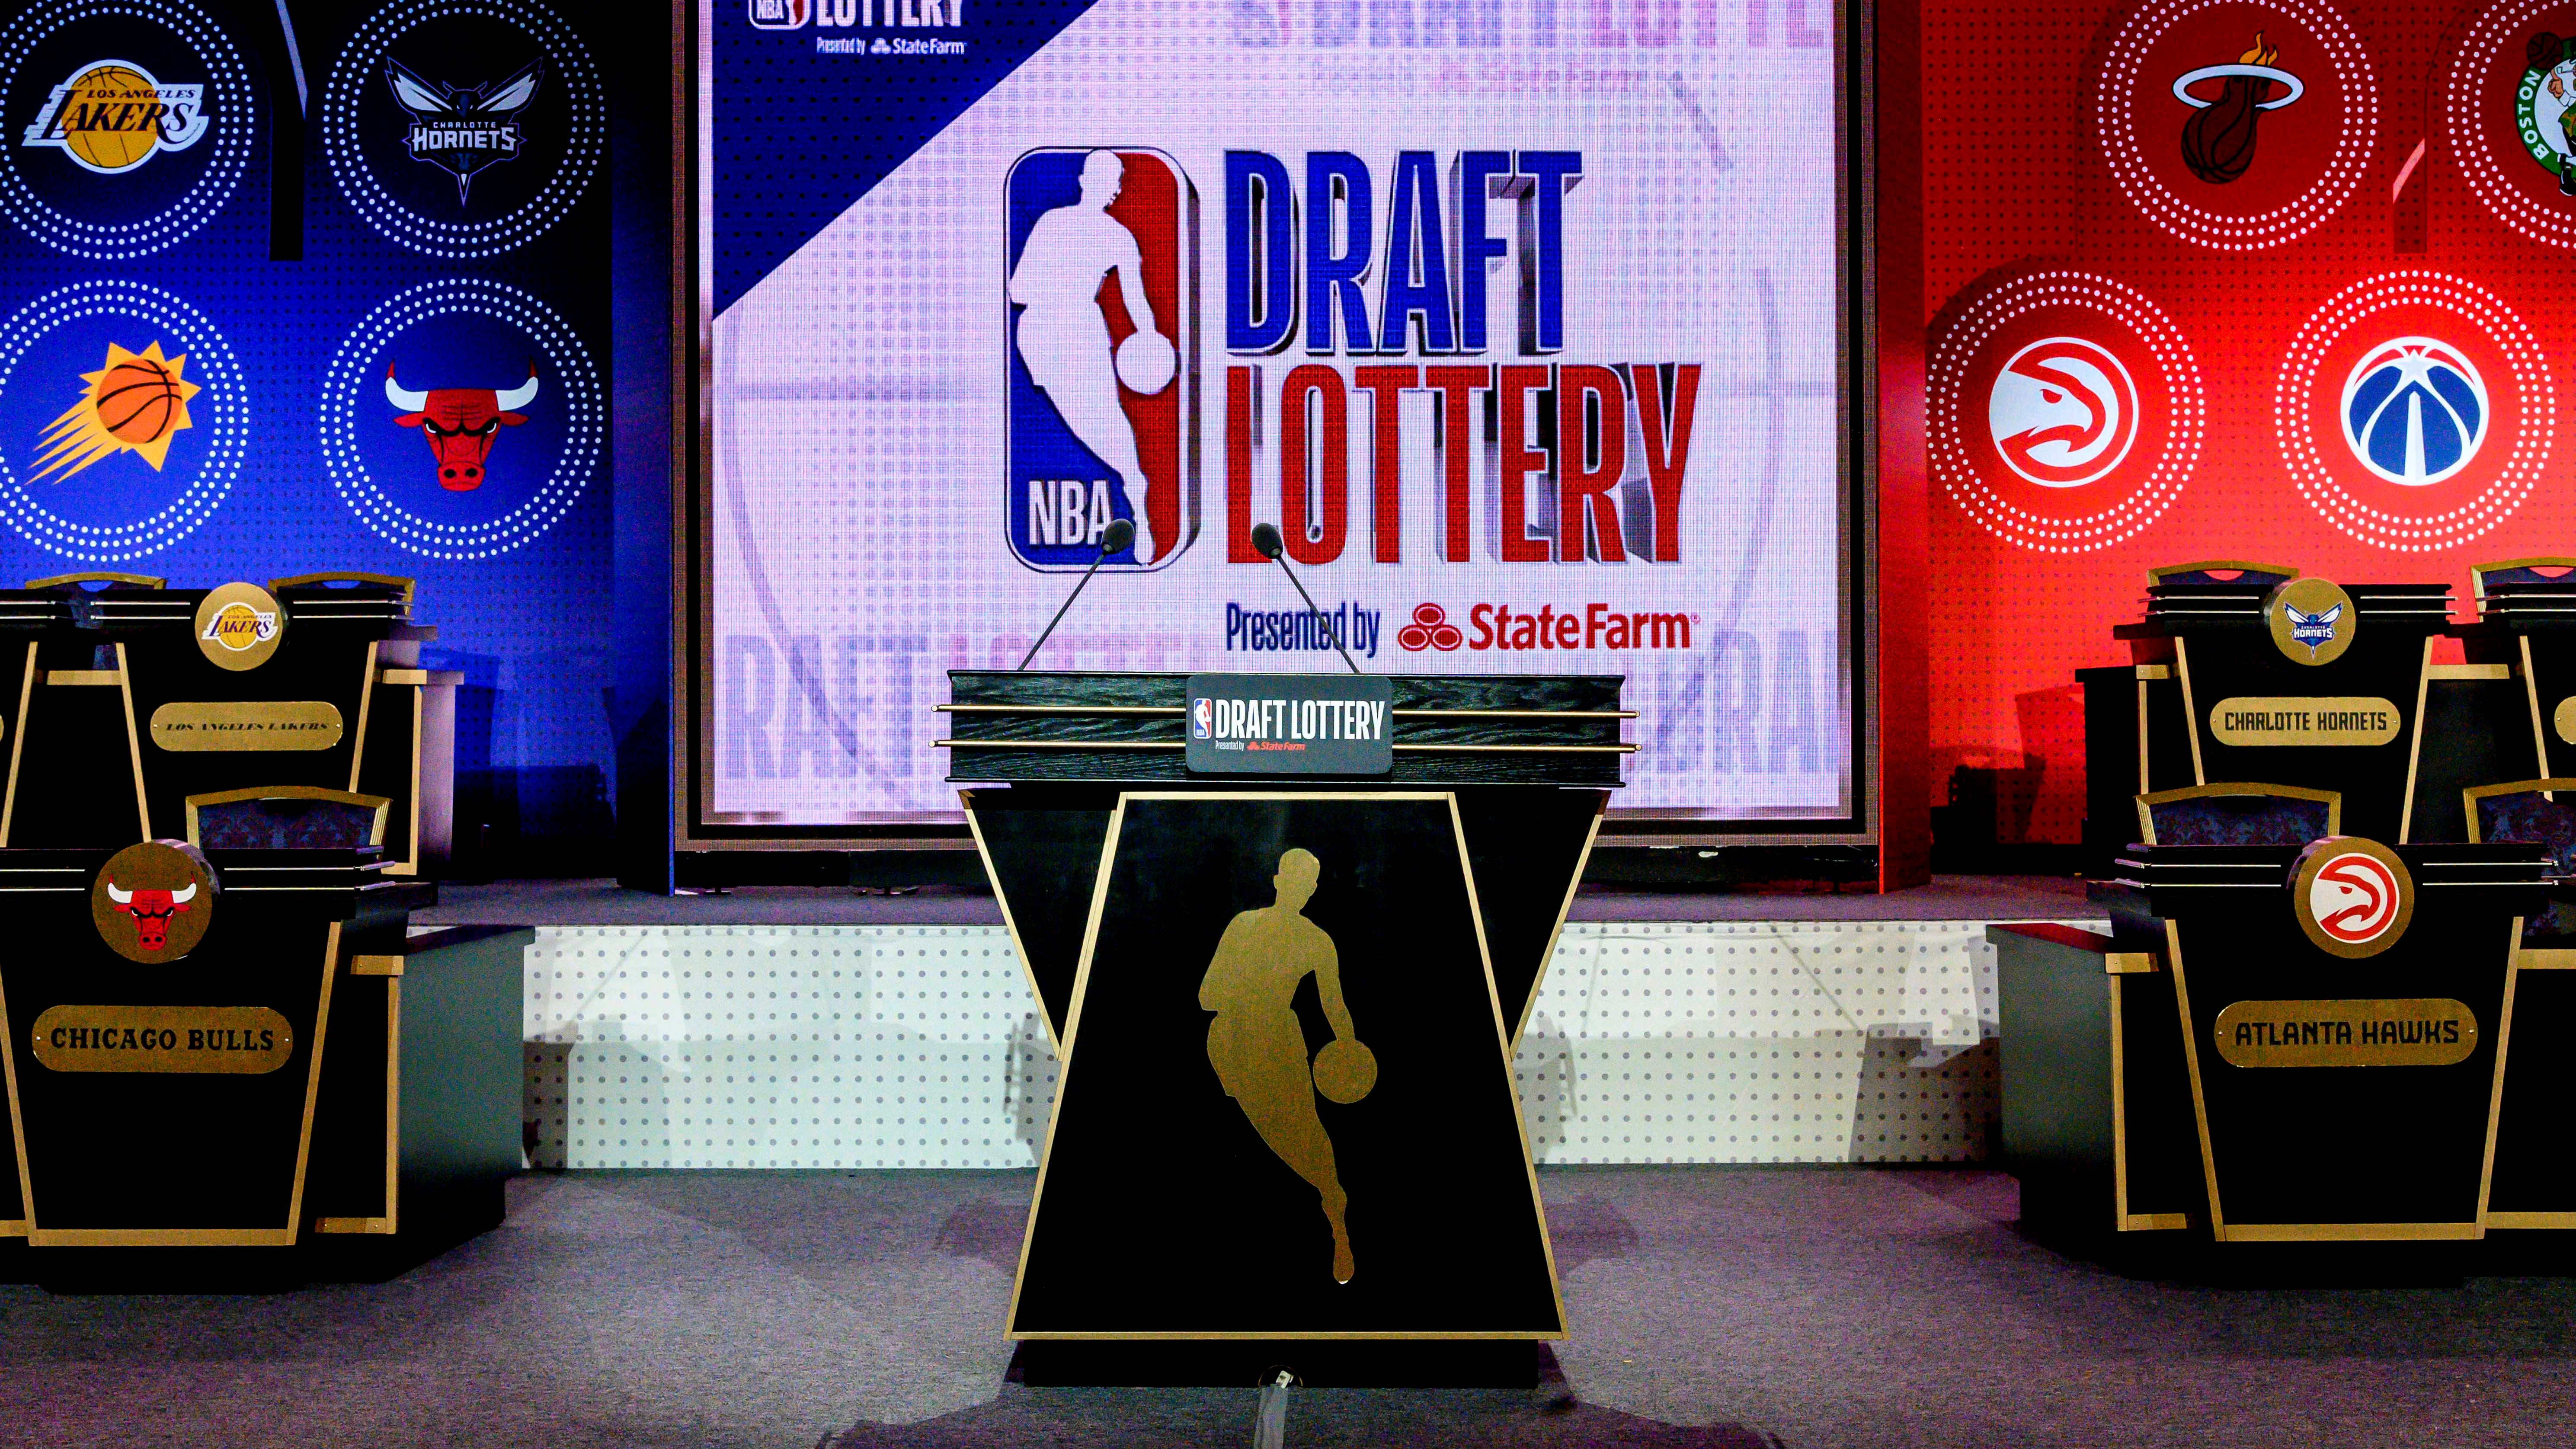 NBA Draft Lottery 2020 to Be Held Virtually Amid Coronavirus Pandemic